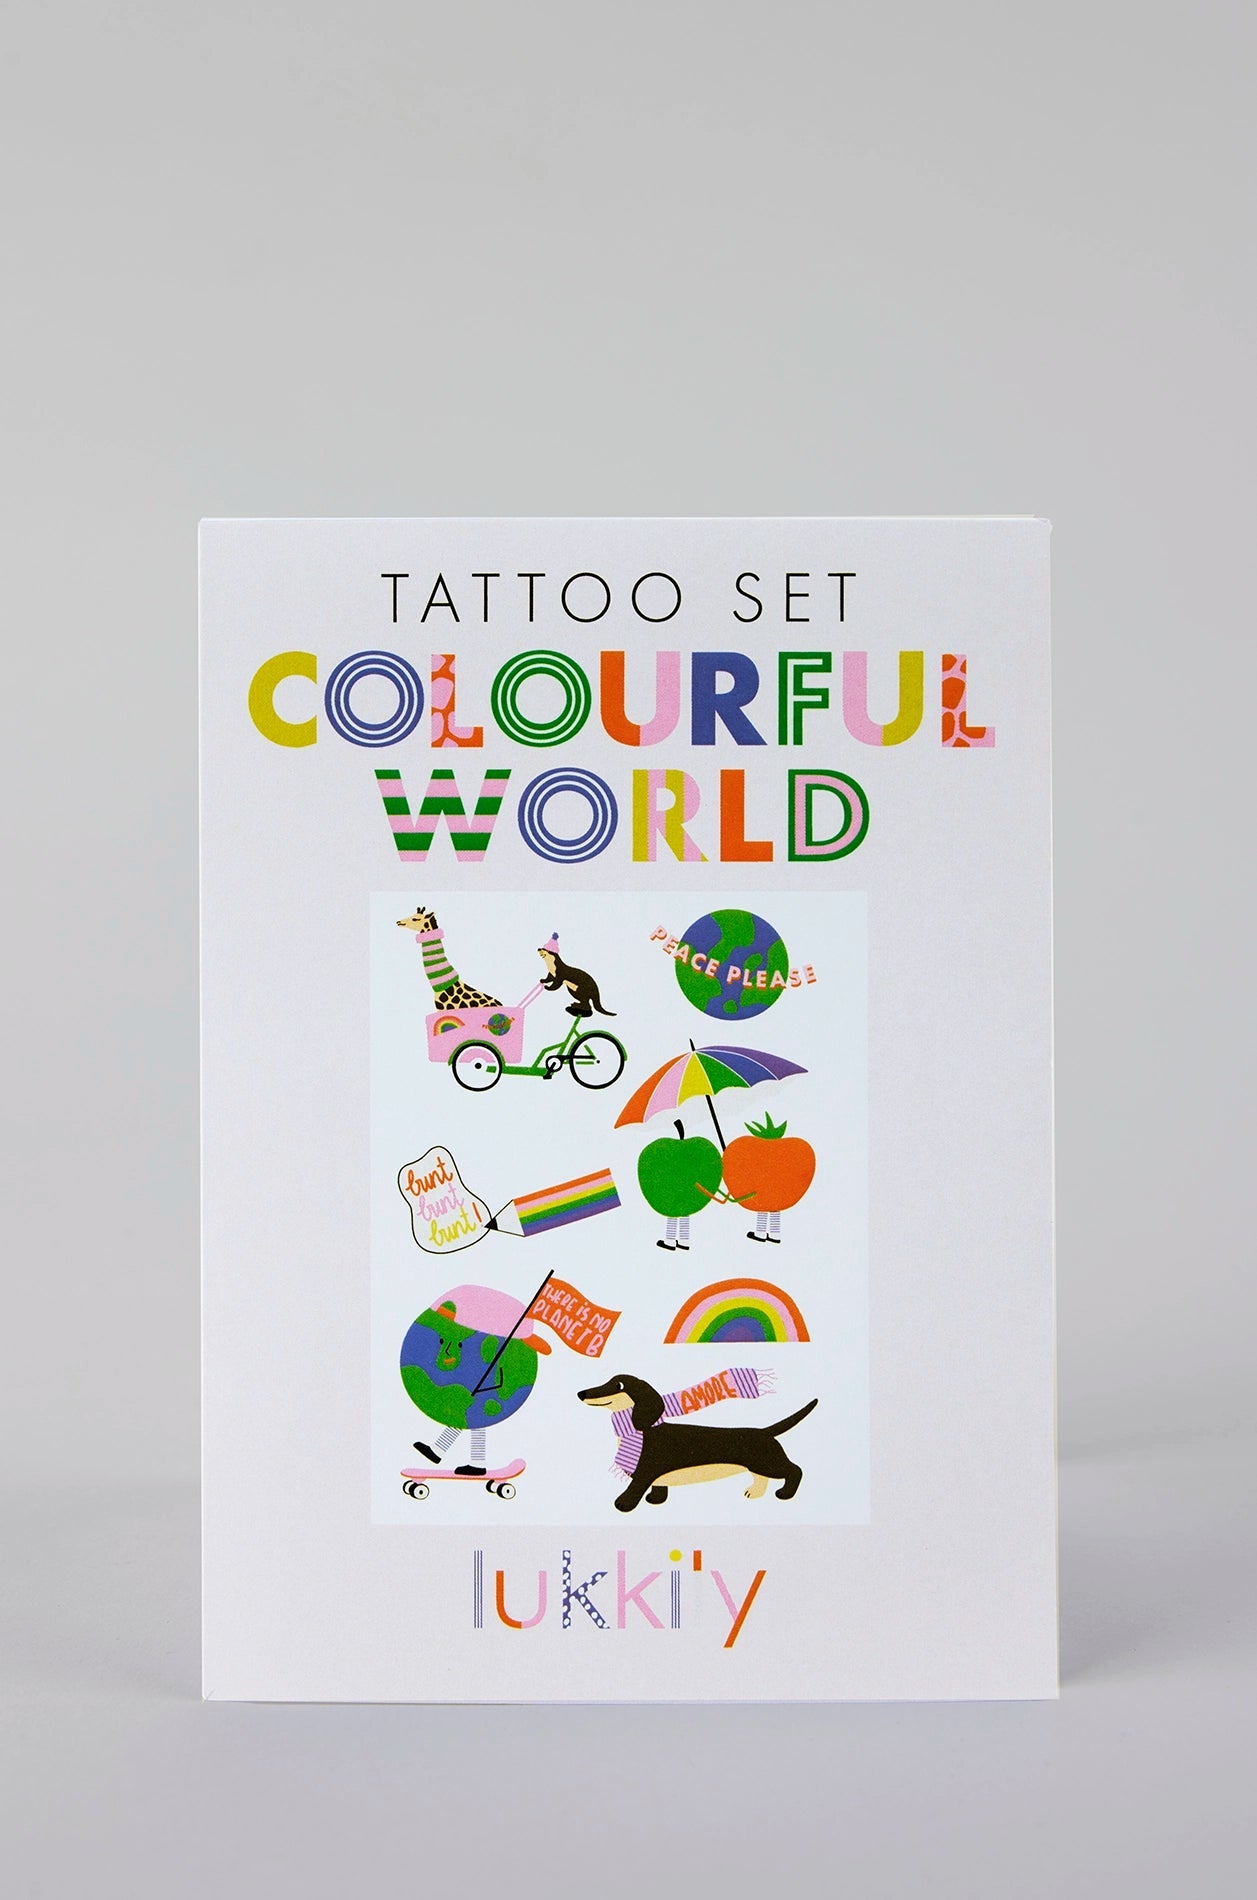 Lukkily - temporäre Tattoos Colorful World